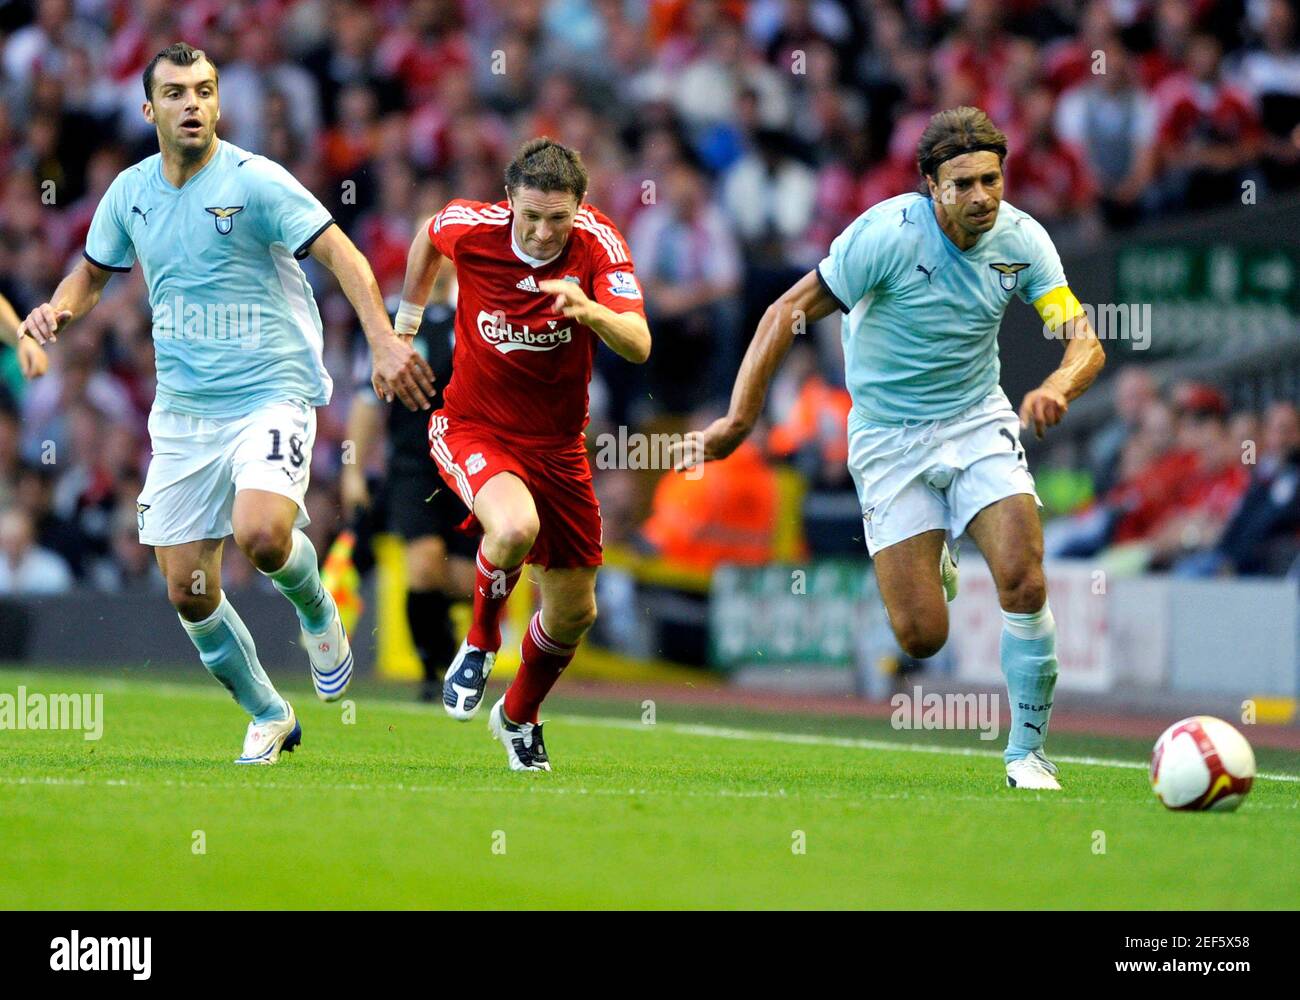 Football - Liverpool v SS Lazio Pre Season Friendly - Anfield - 8/8/08  Liverpool's Robbie Keane in